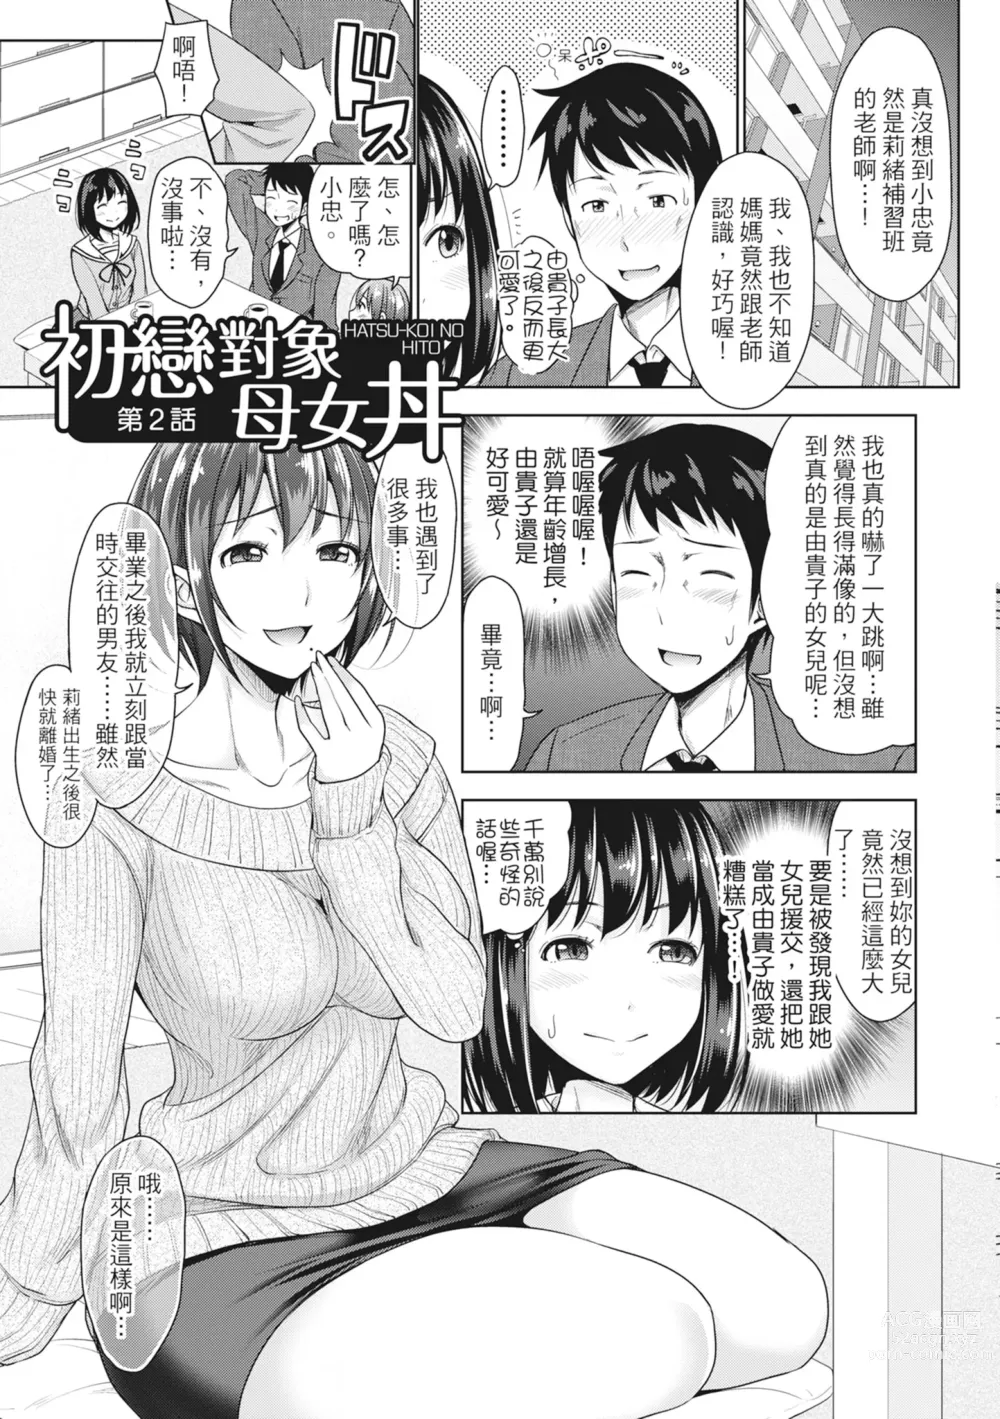 Page 32 of manga 如果性格超契合的援交少女變成了繼女讓你24小時隨時無套中出 (decensored)